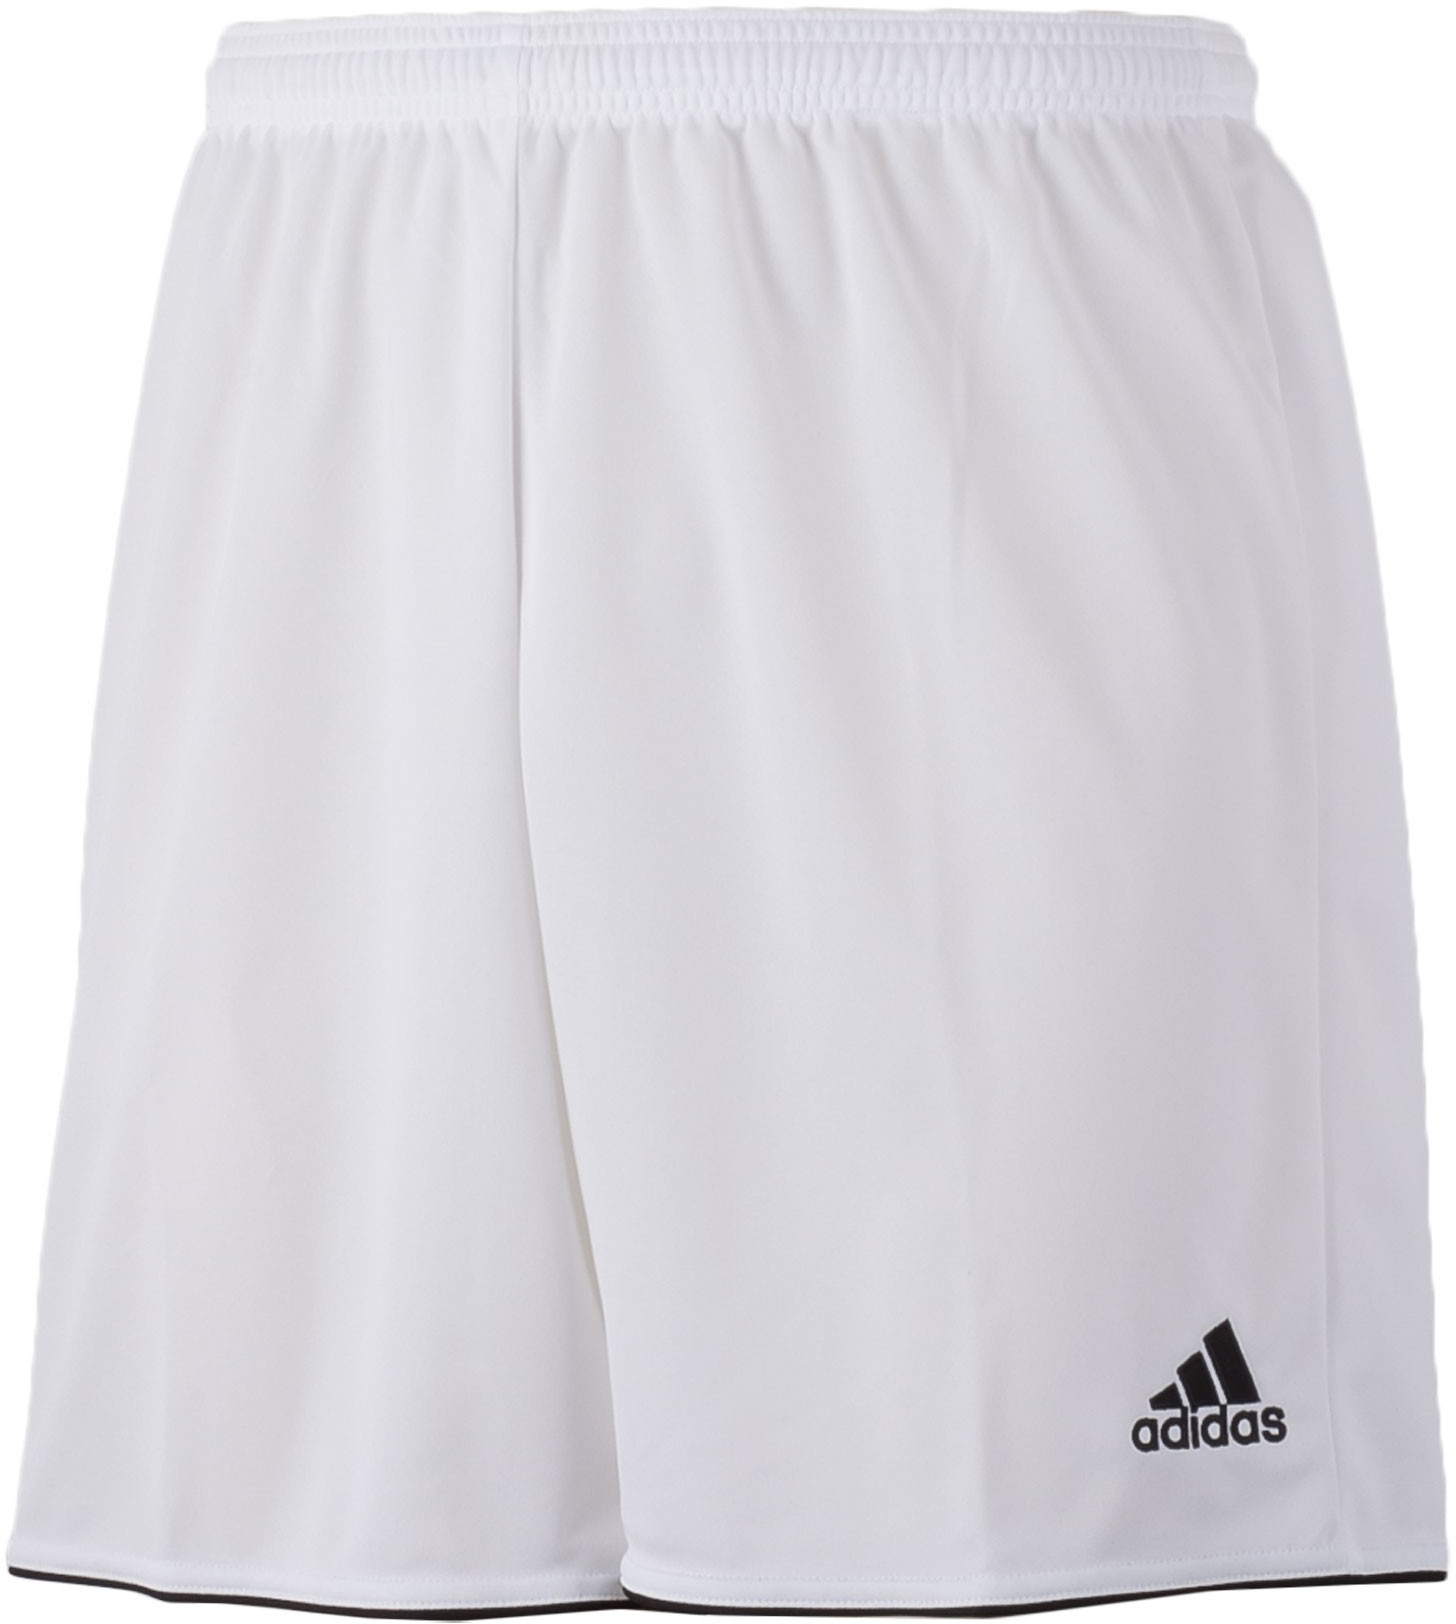 Men's football shorts